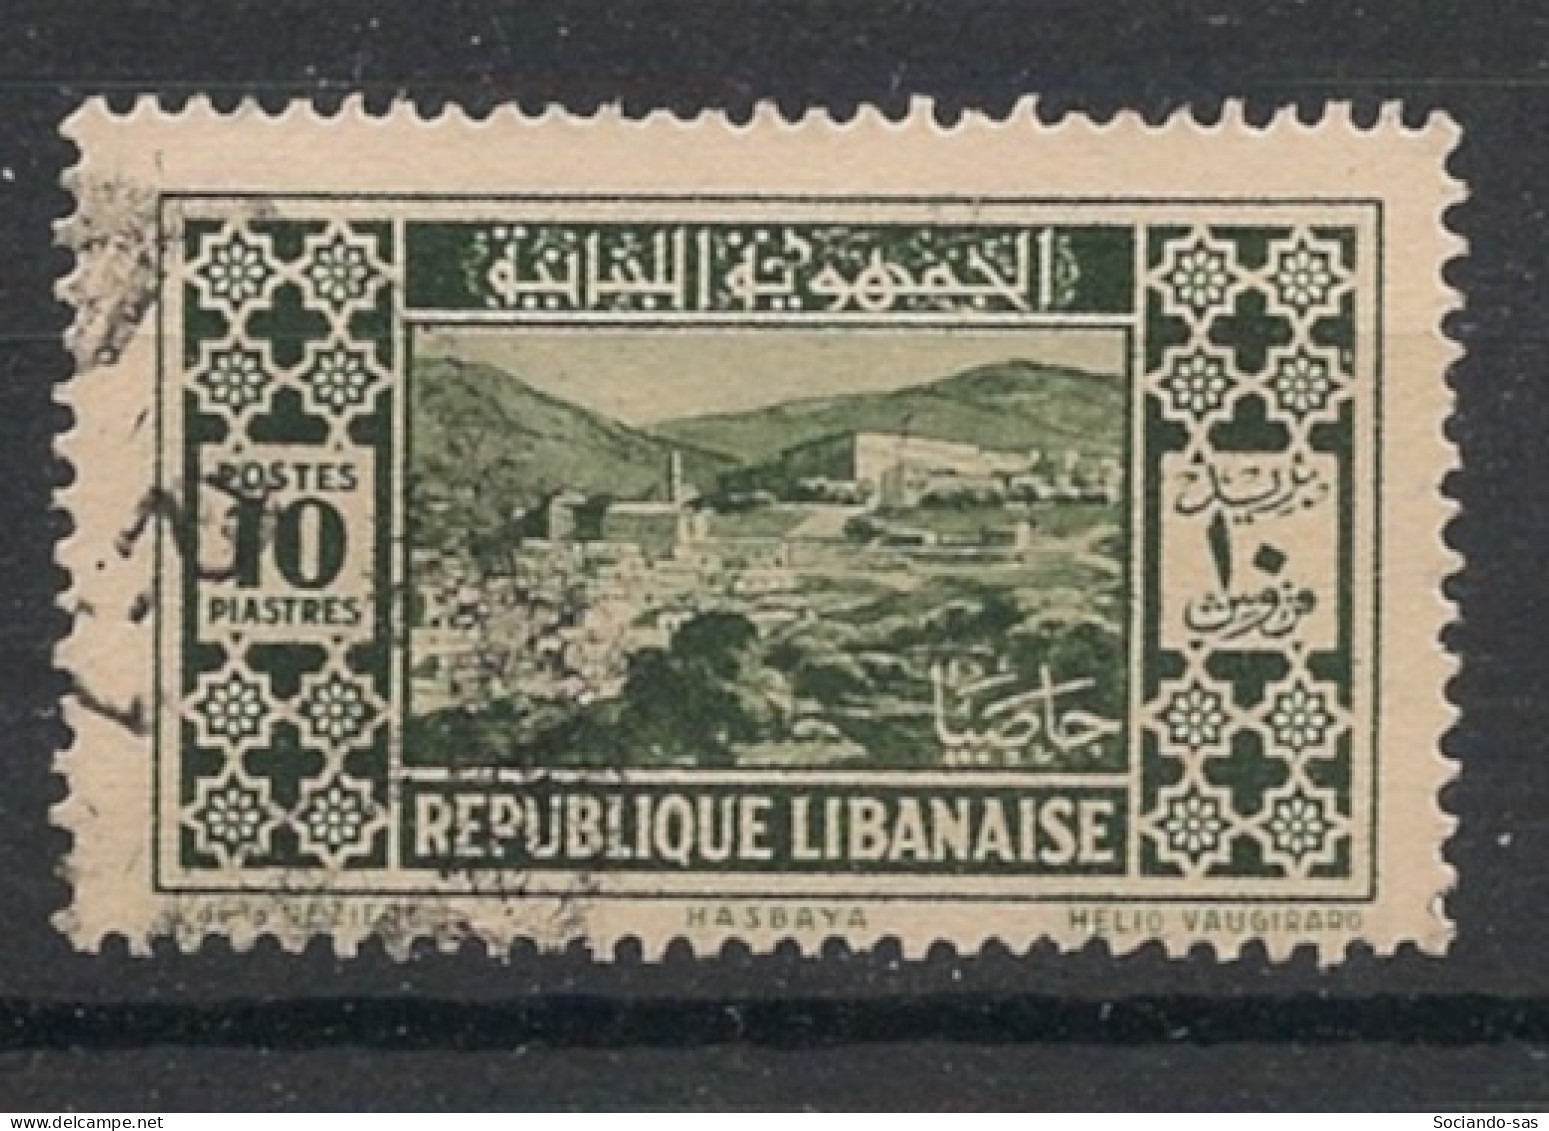 GRAND LIBAN - 1930-35 - N°YT. 144 - Hasbaya 10pi Vert-noir - Oblitéré / Used - Gebraucht